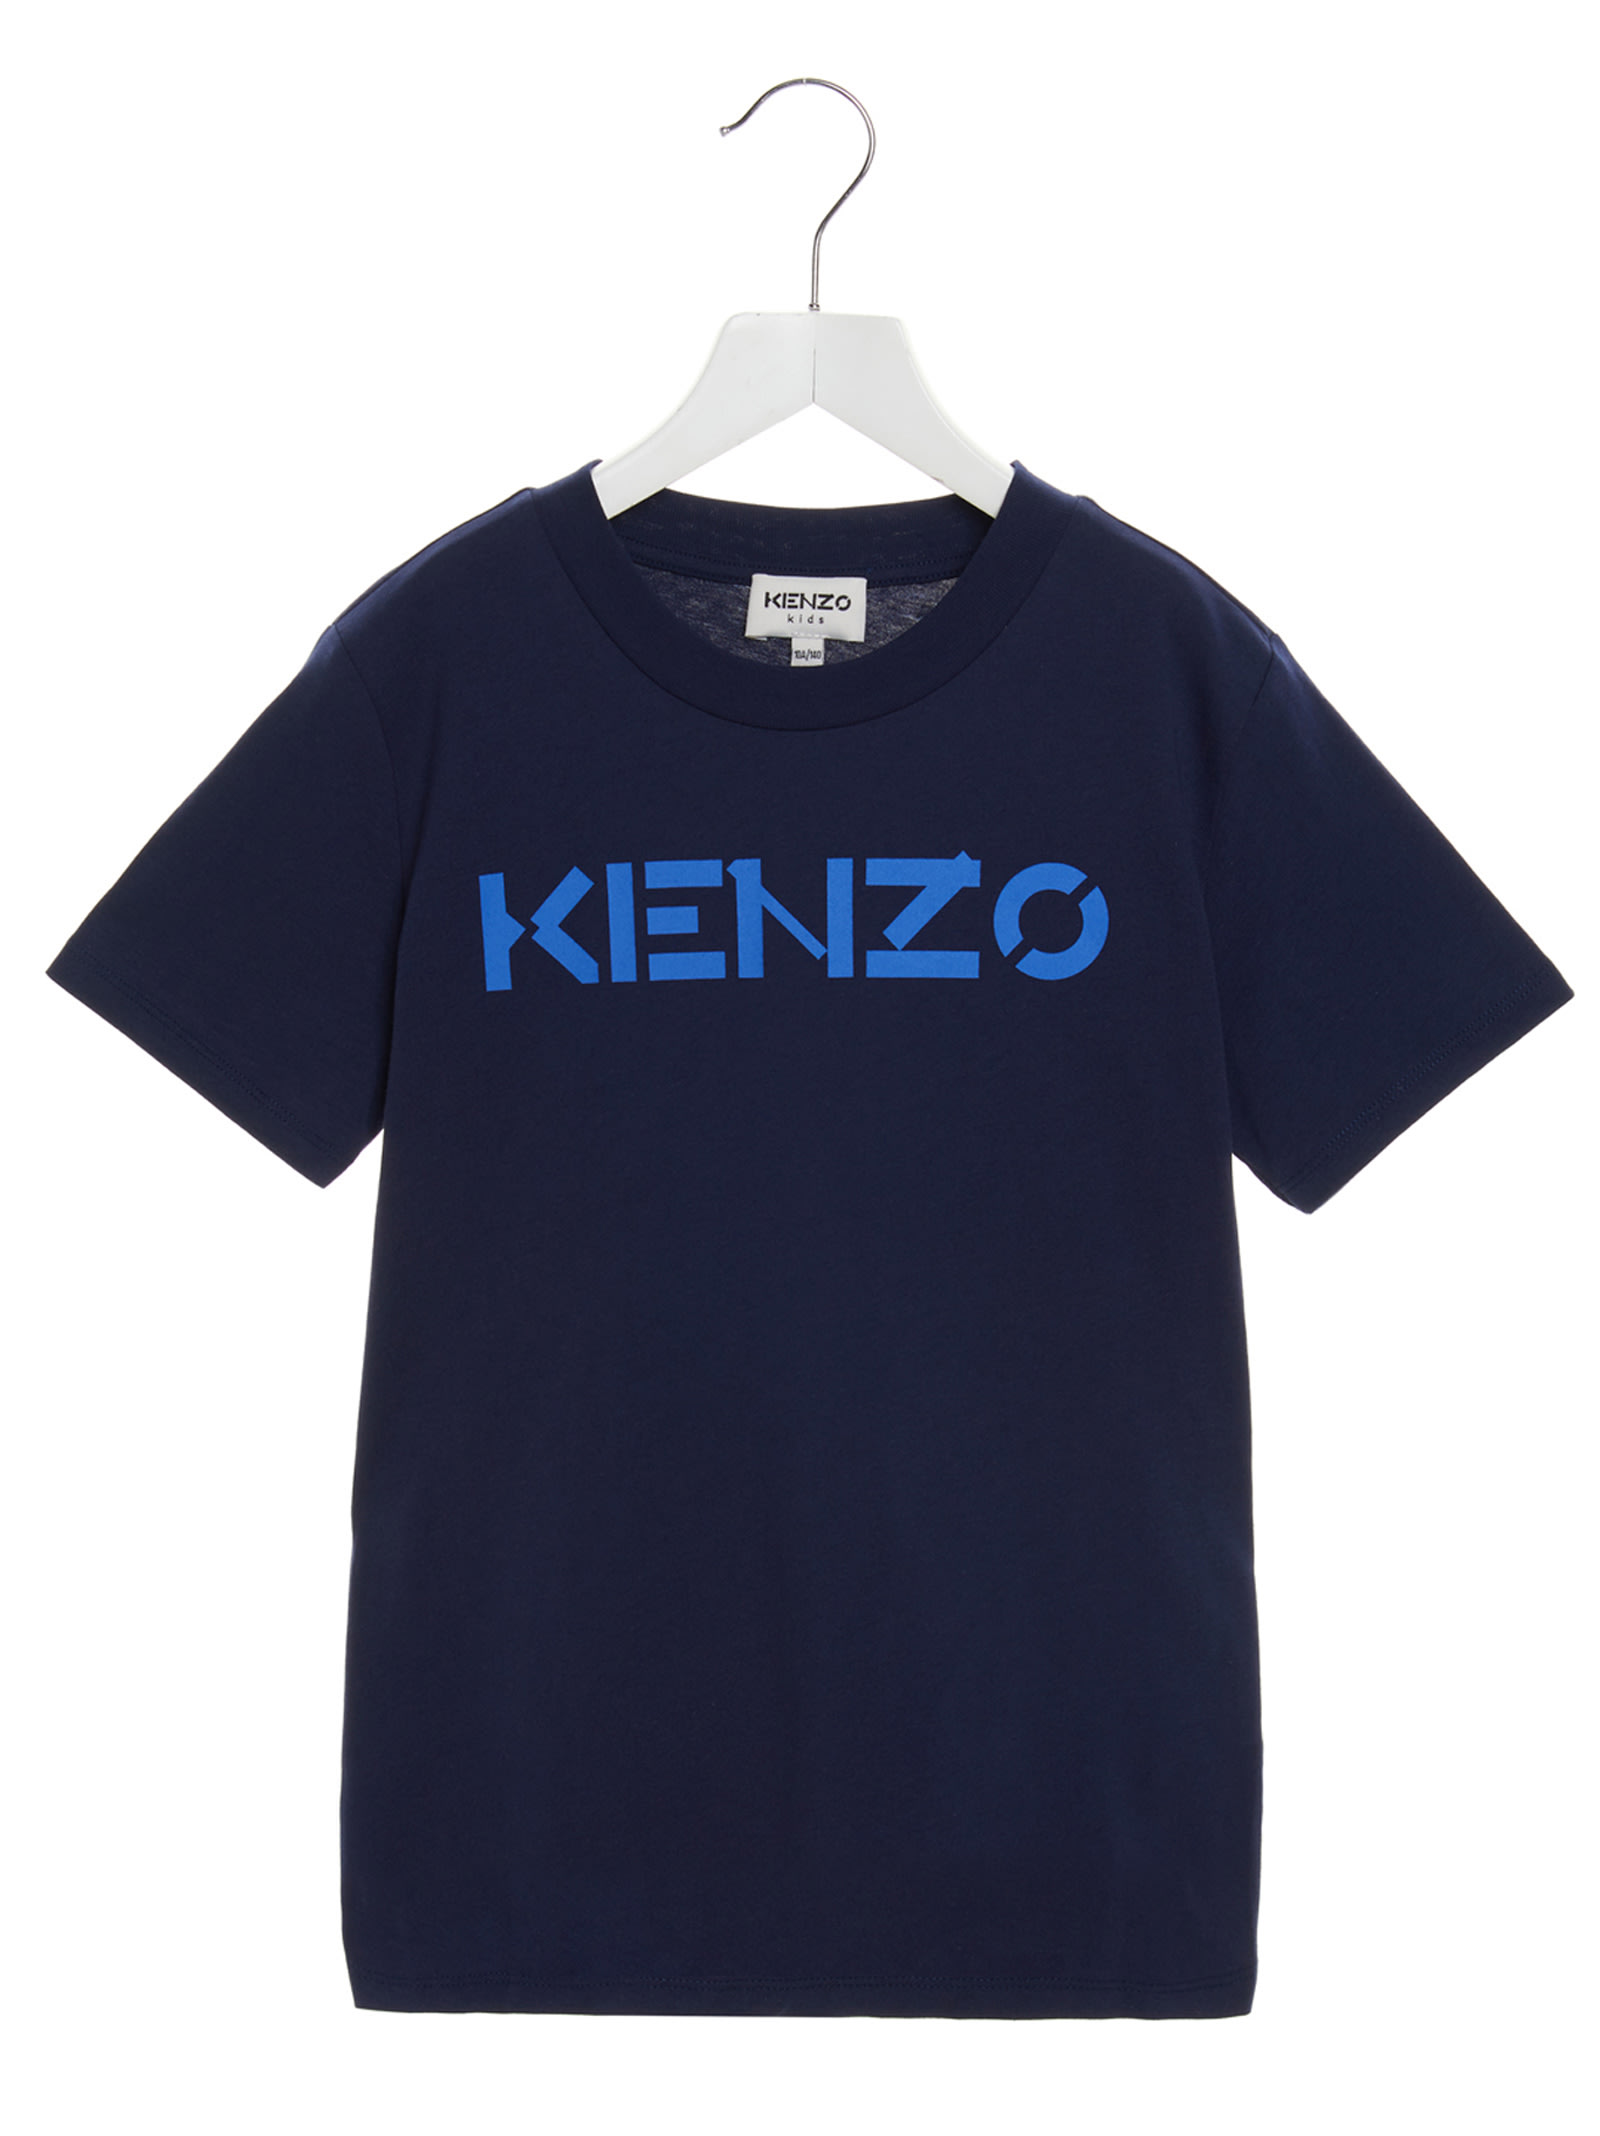 KENZO T-SHIRT,11903150